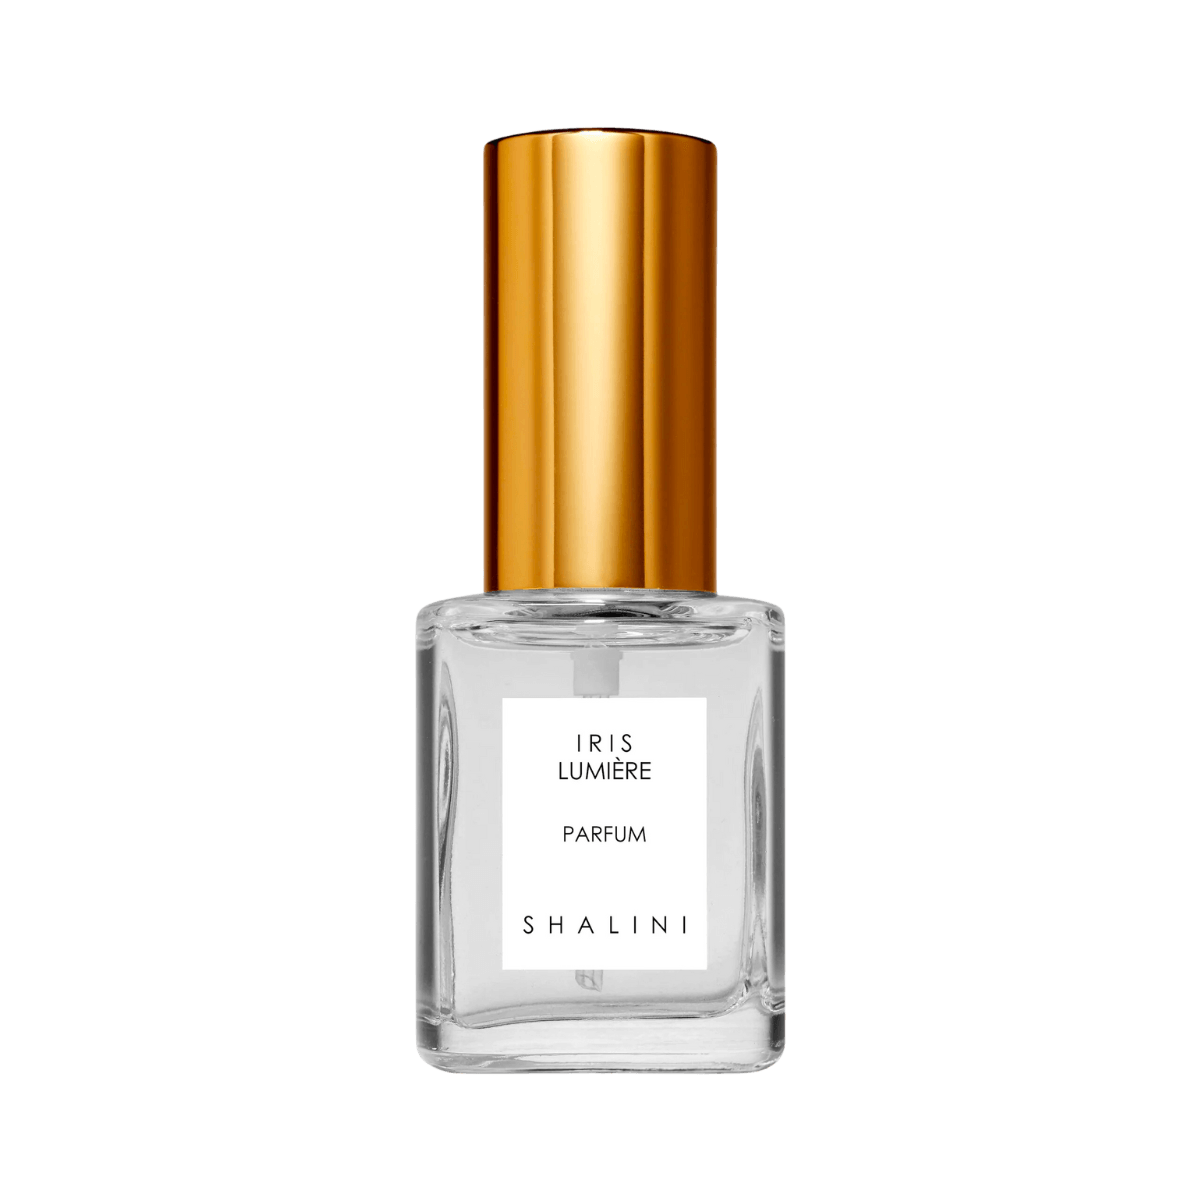 Image of Iris Lumiere extrait de parfum by the perfume brand Shalini